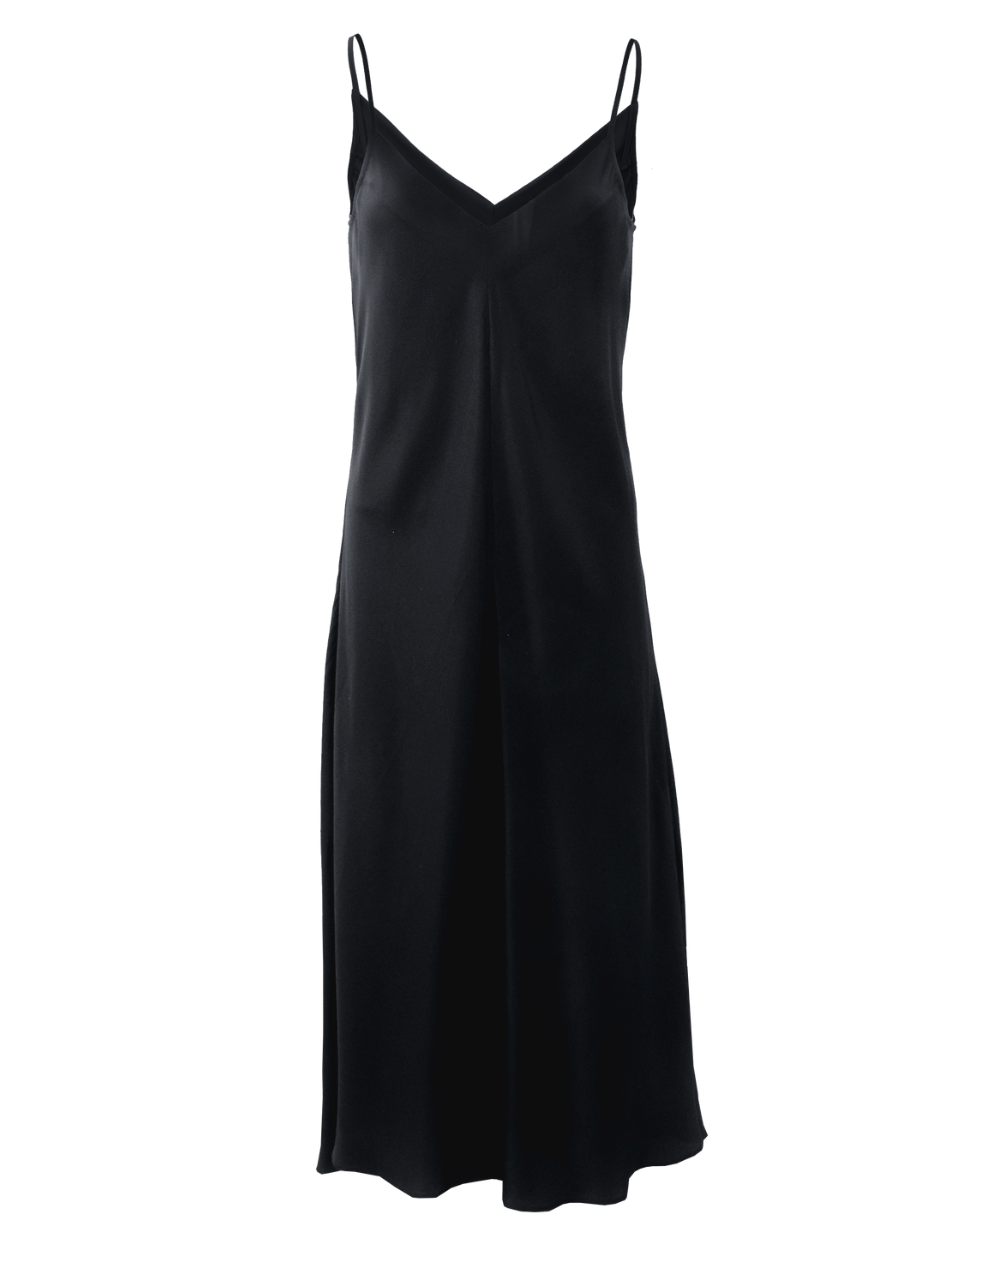 Slip Dress (Black)